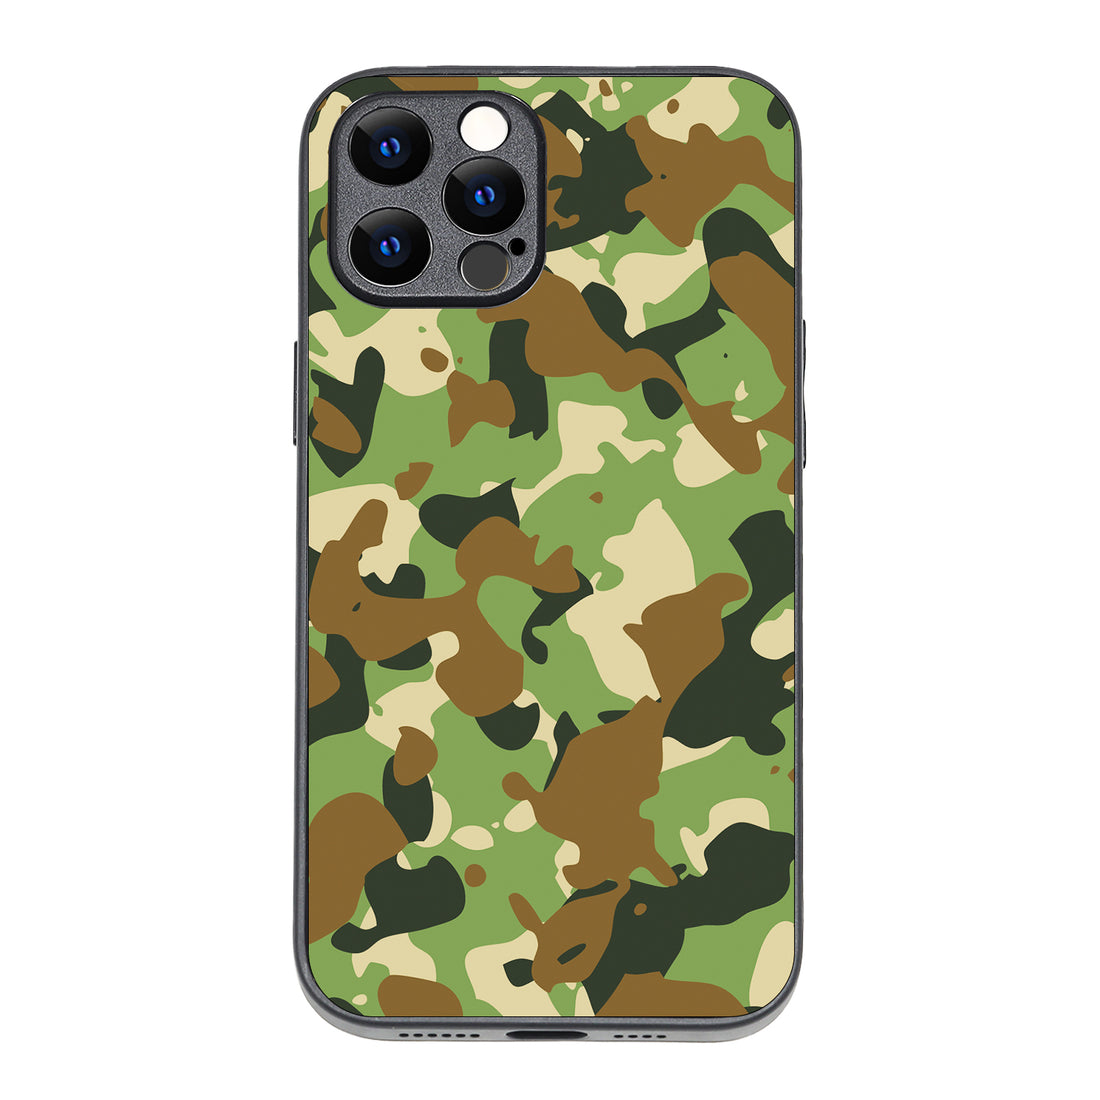 Camouflage Design iPhone 12 Pro Max Case